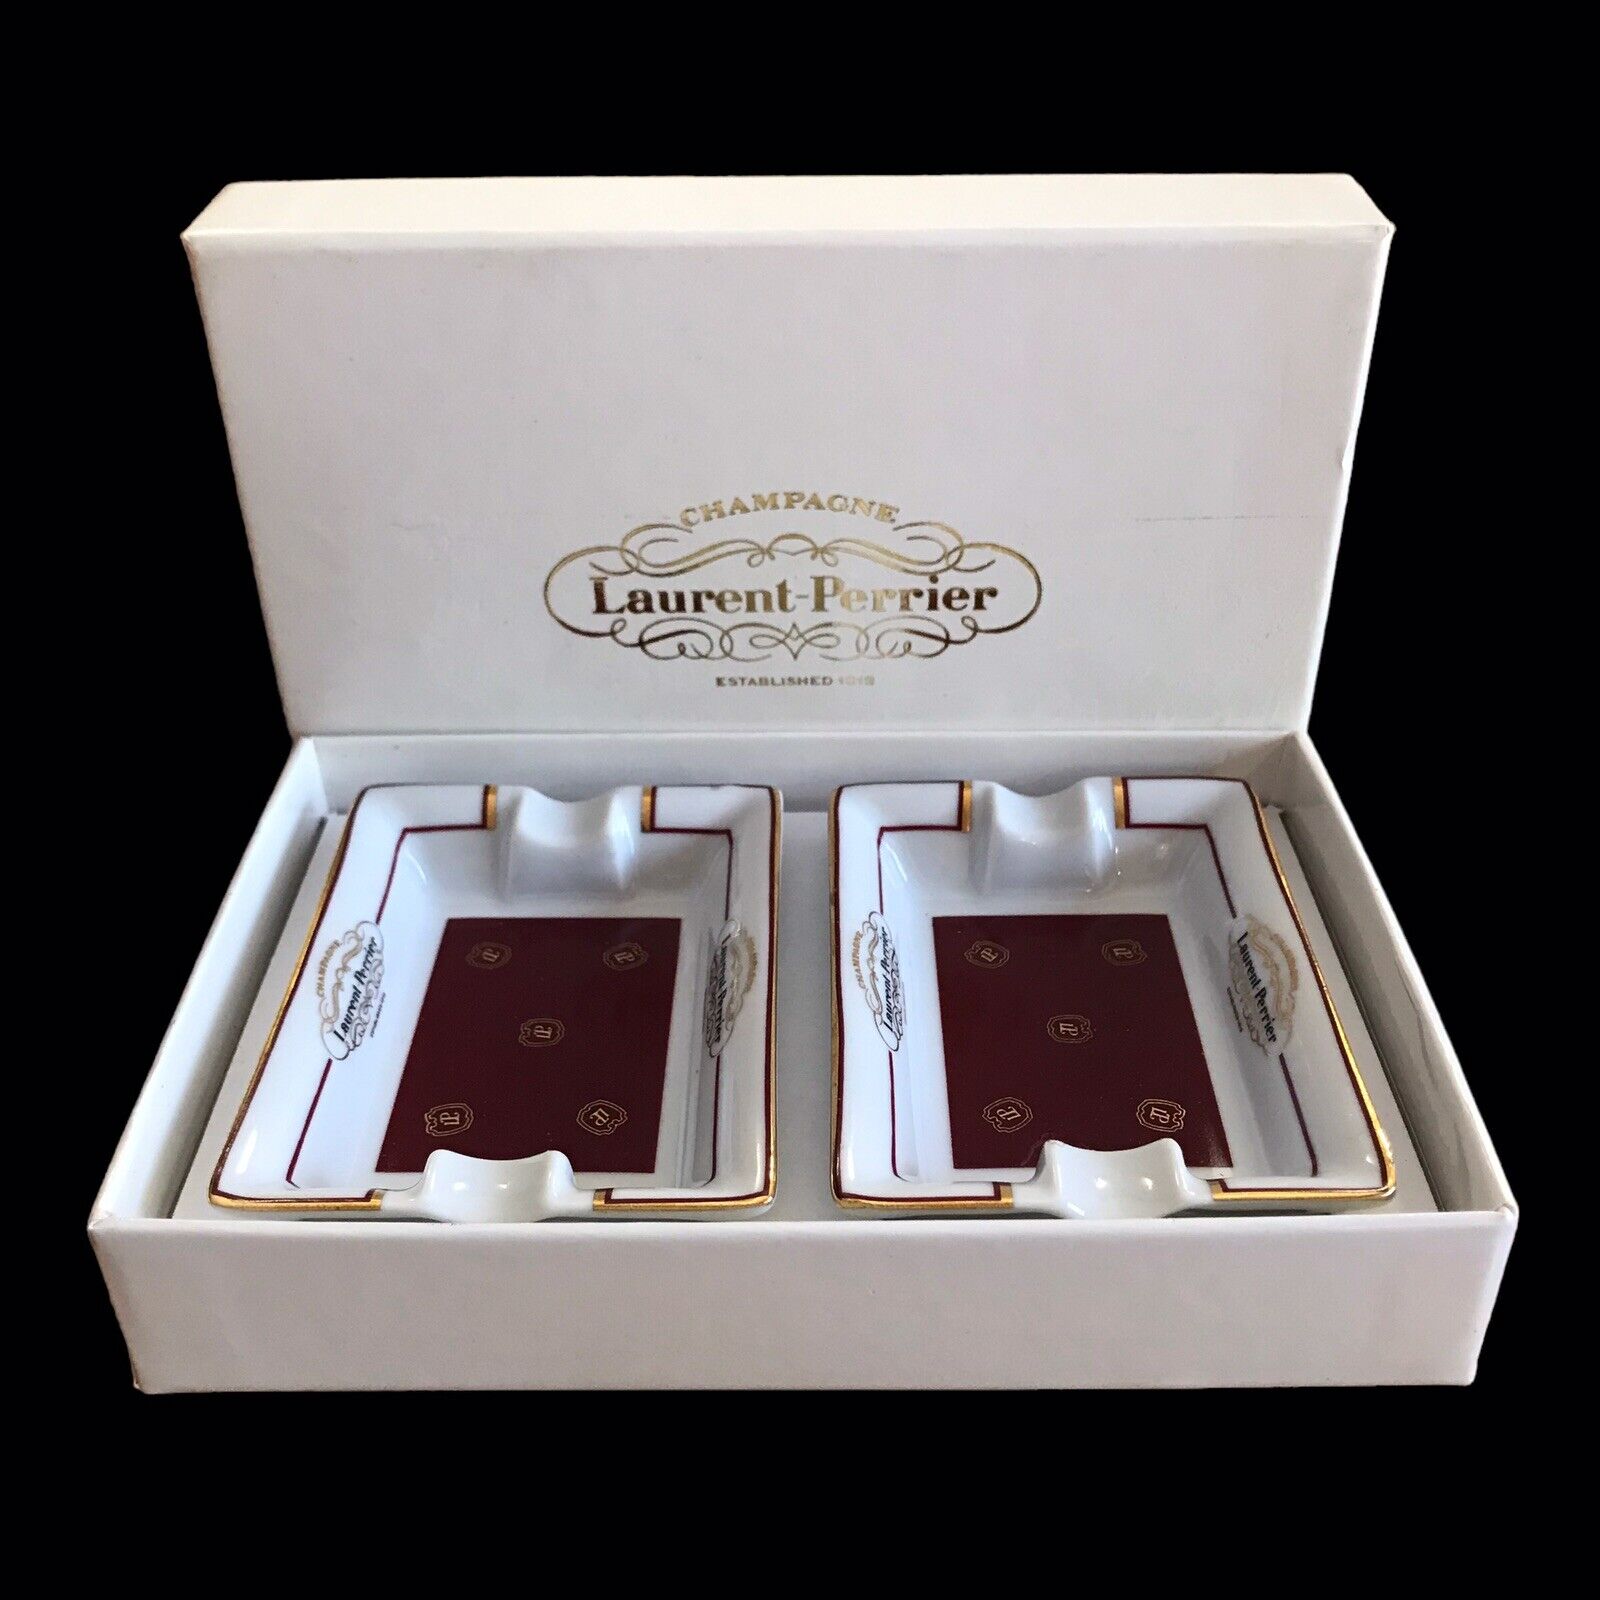 Laurent Perrier Champagne Ashtrays Set Of 2 In Original Box Porcelain 3” X 2”